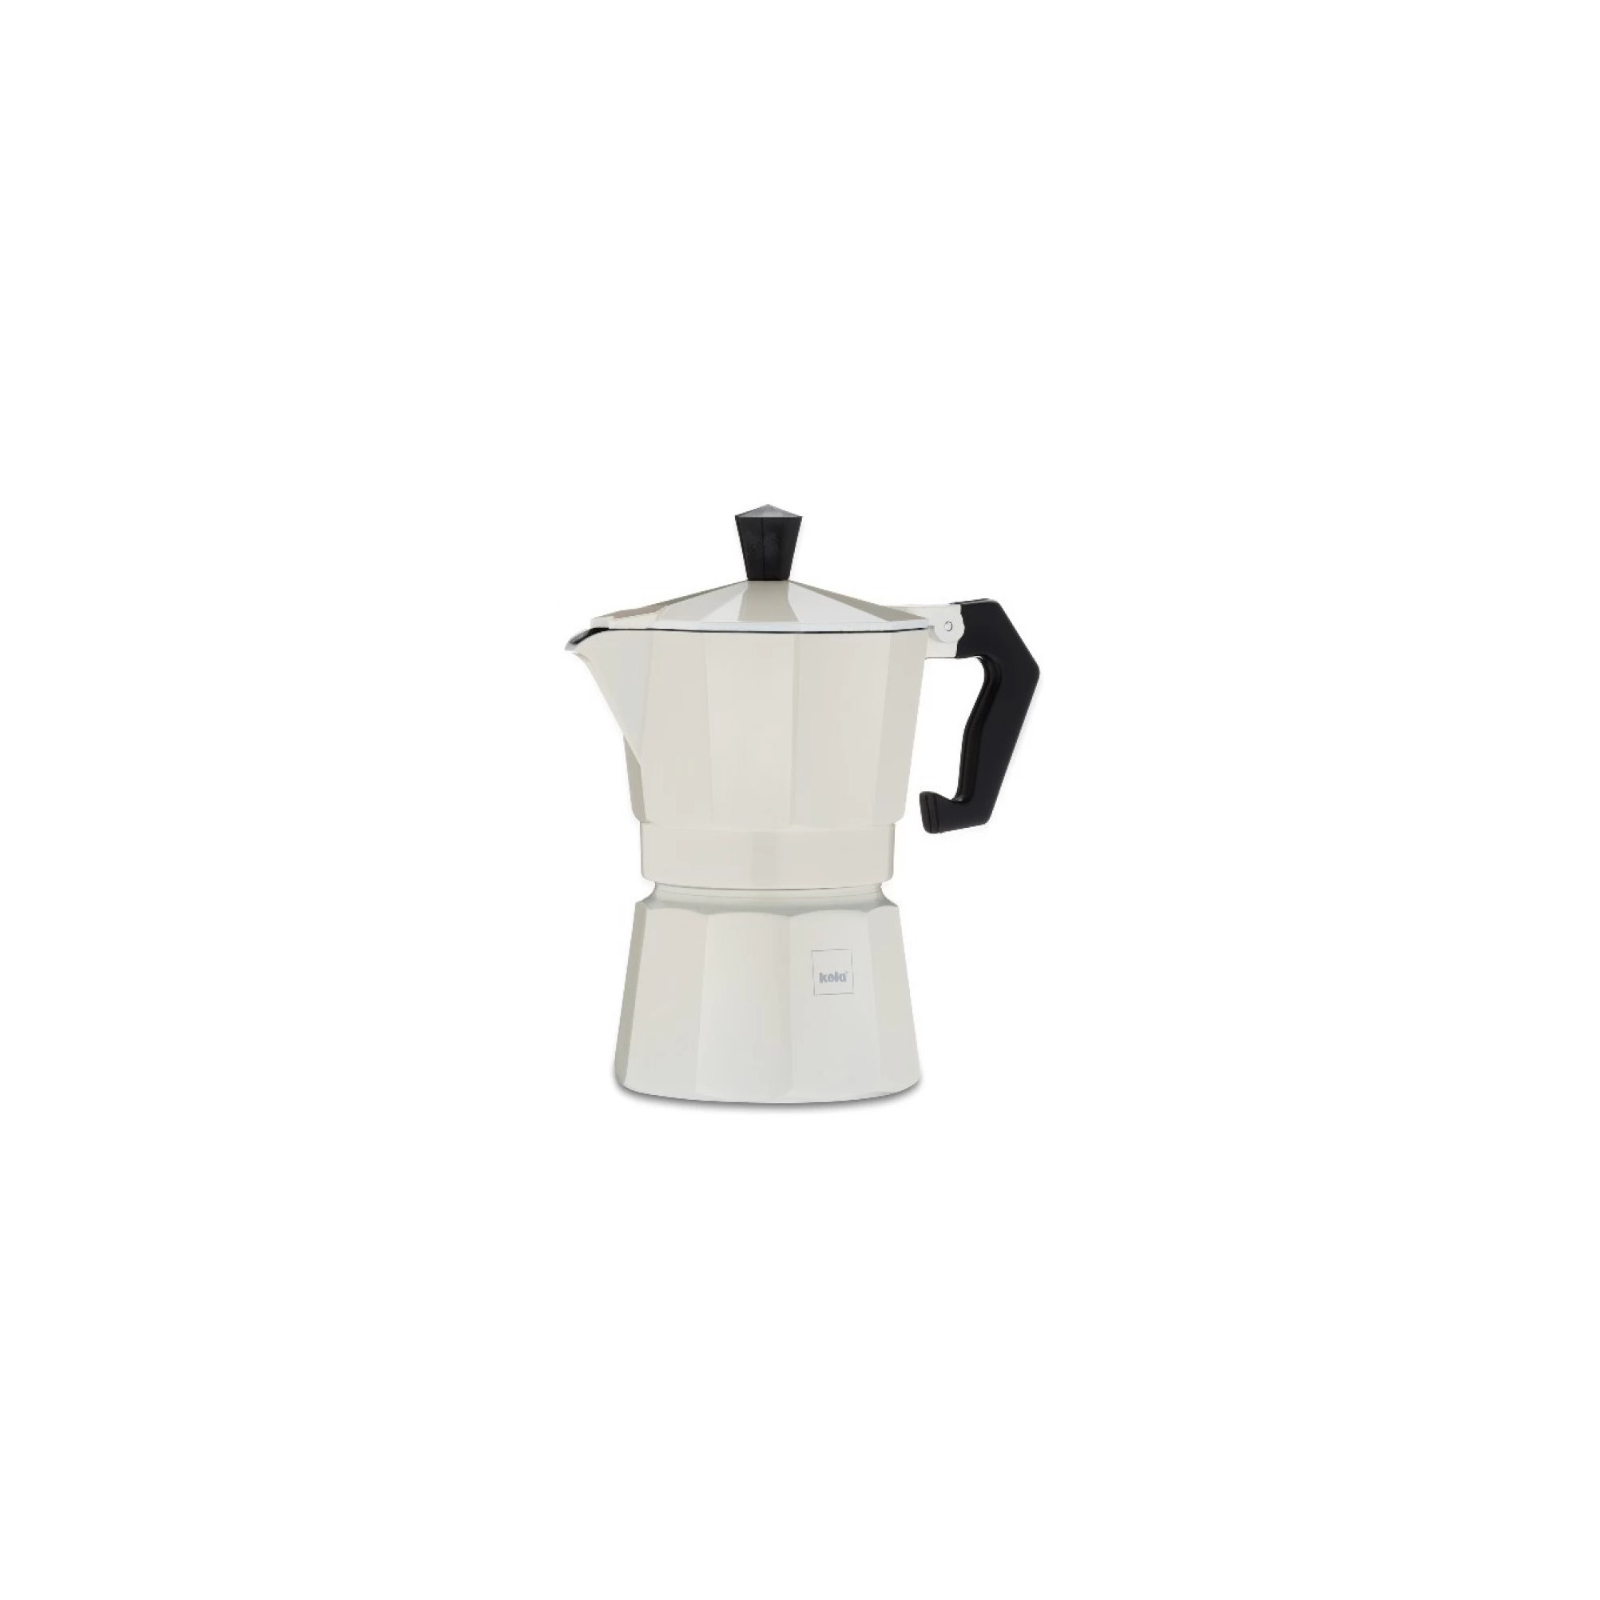 Гейзерная кофеварка Kela Italia 300 мл 6 Cap Black (10554)